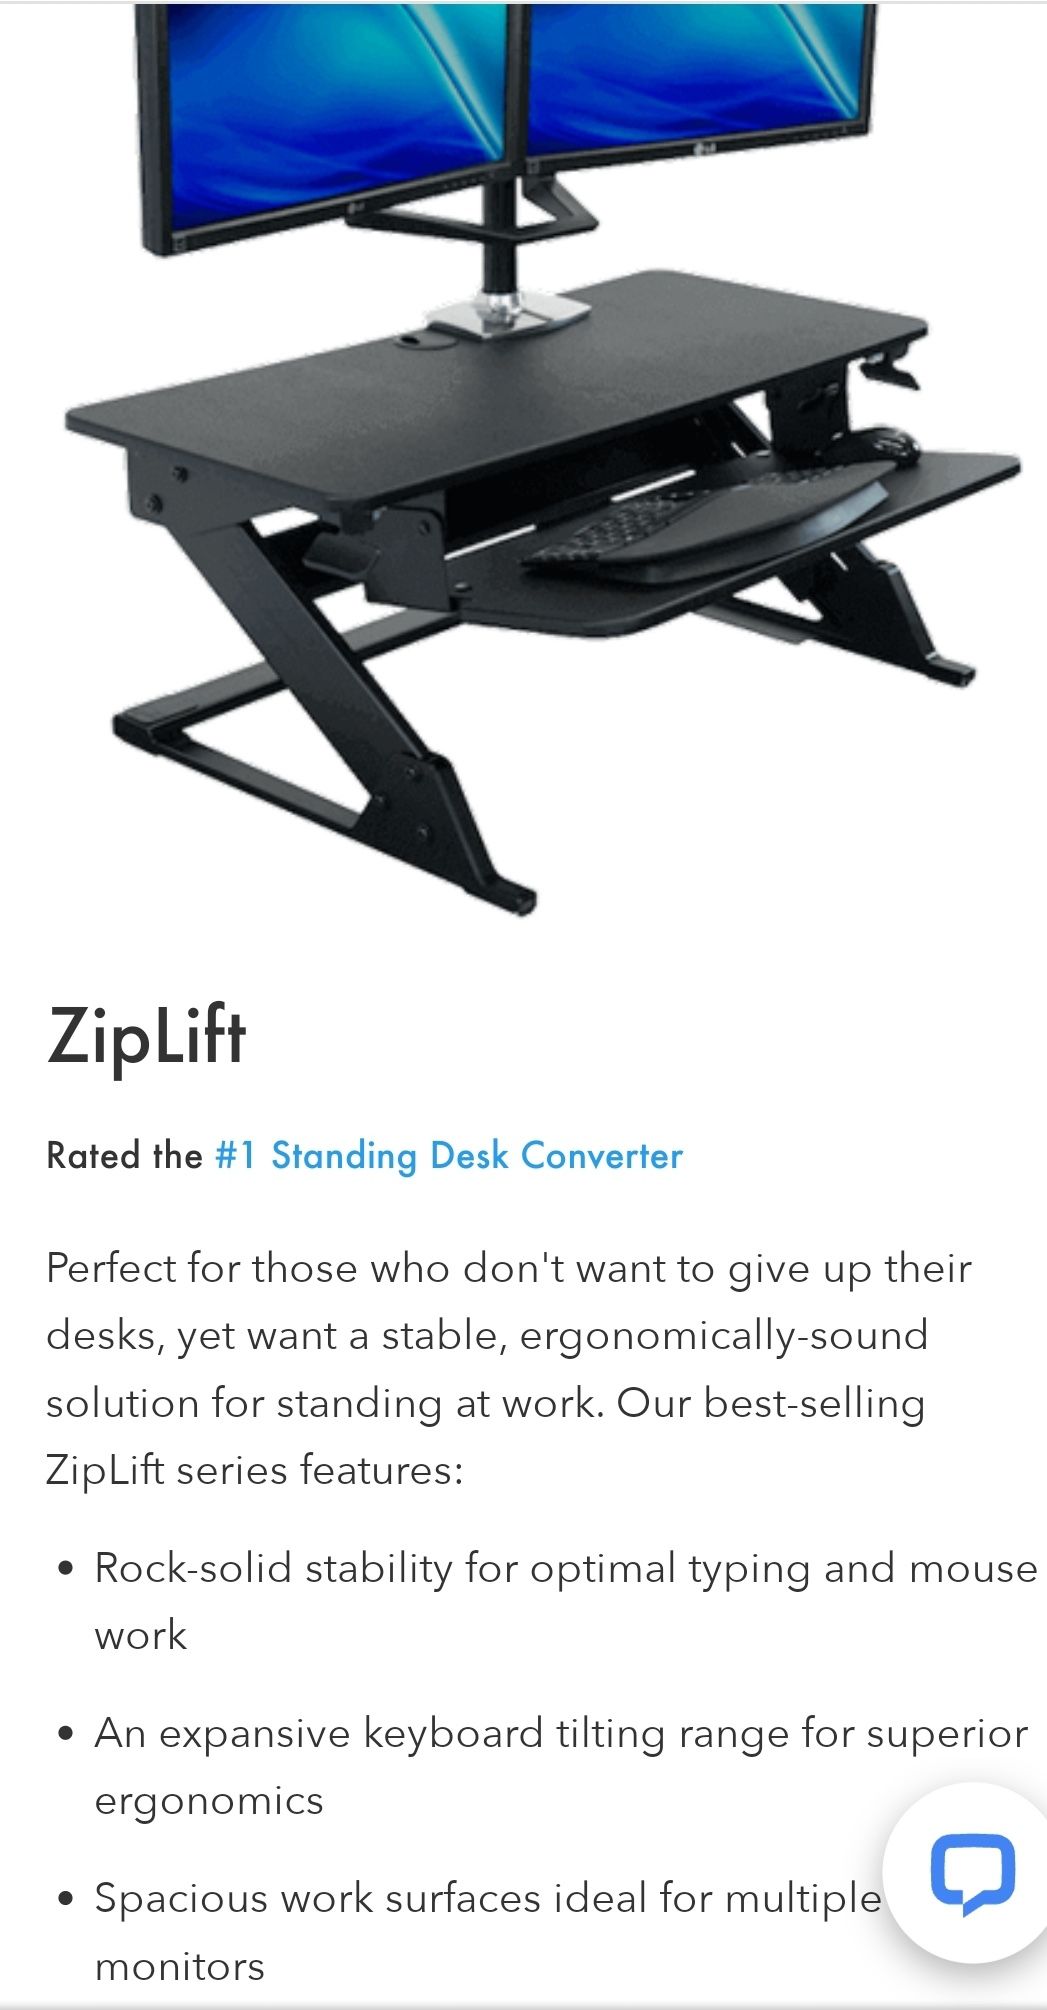 IMovr Zip lift, Standing Desktop Converter 